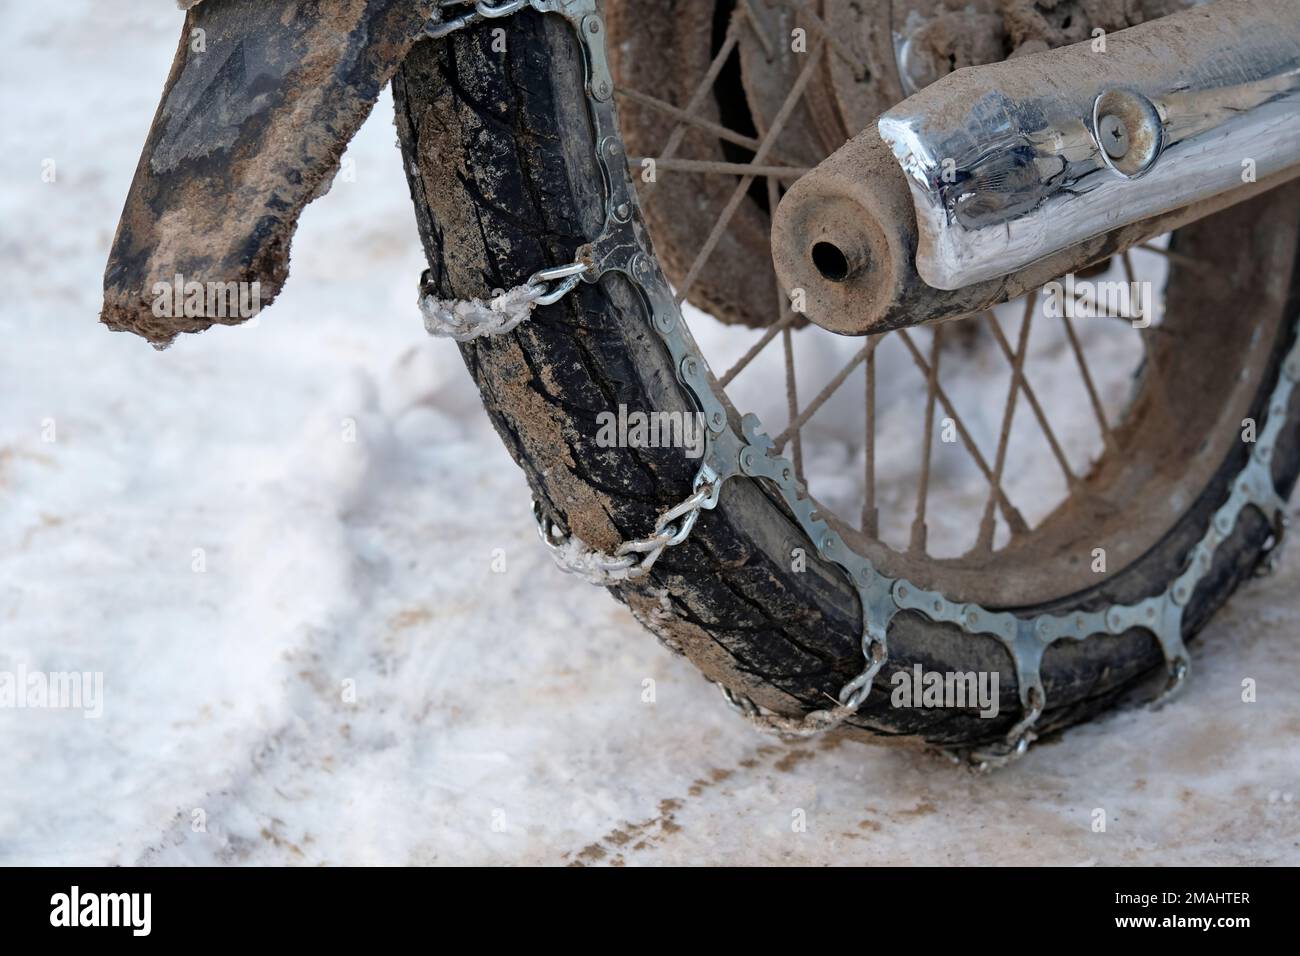 Moto avec chaînes à neige Photo Stock - Alamy